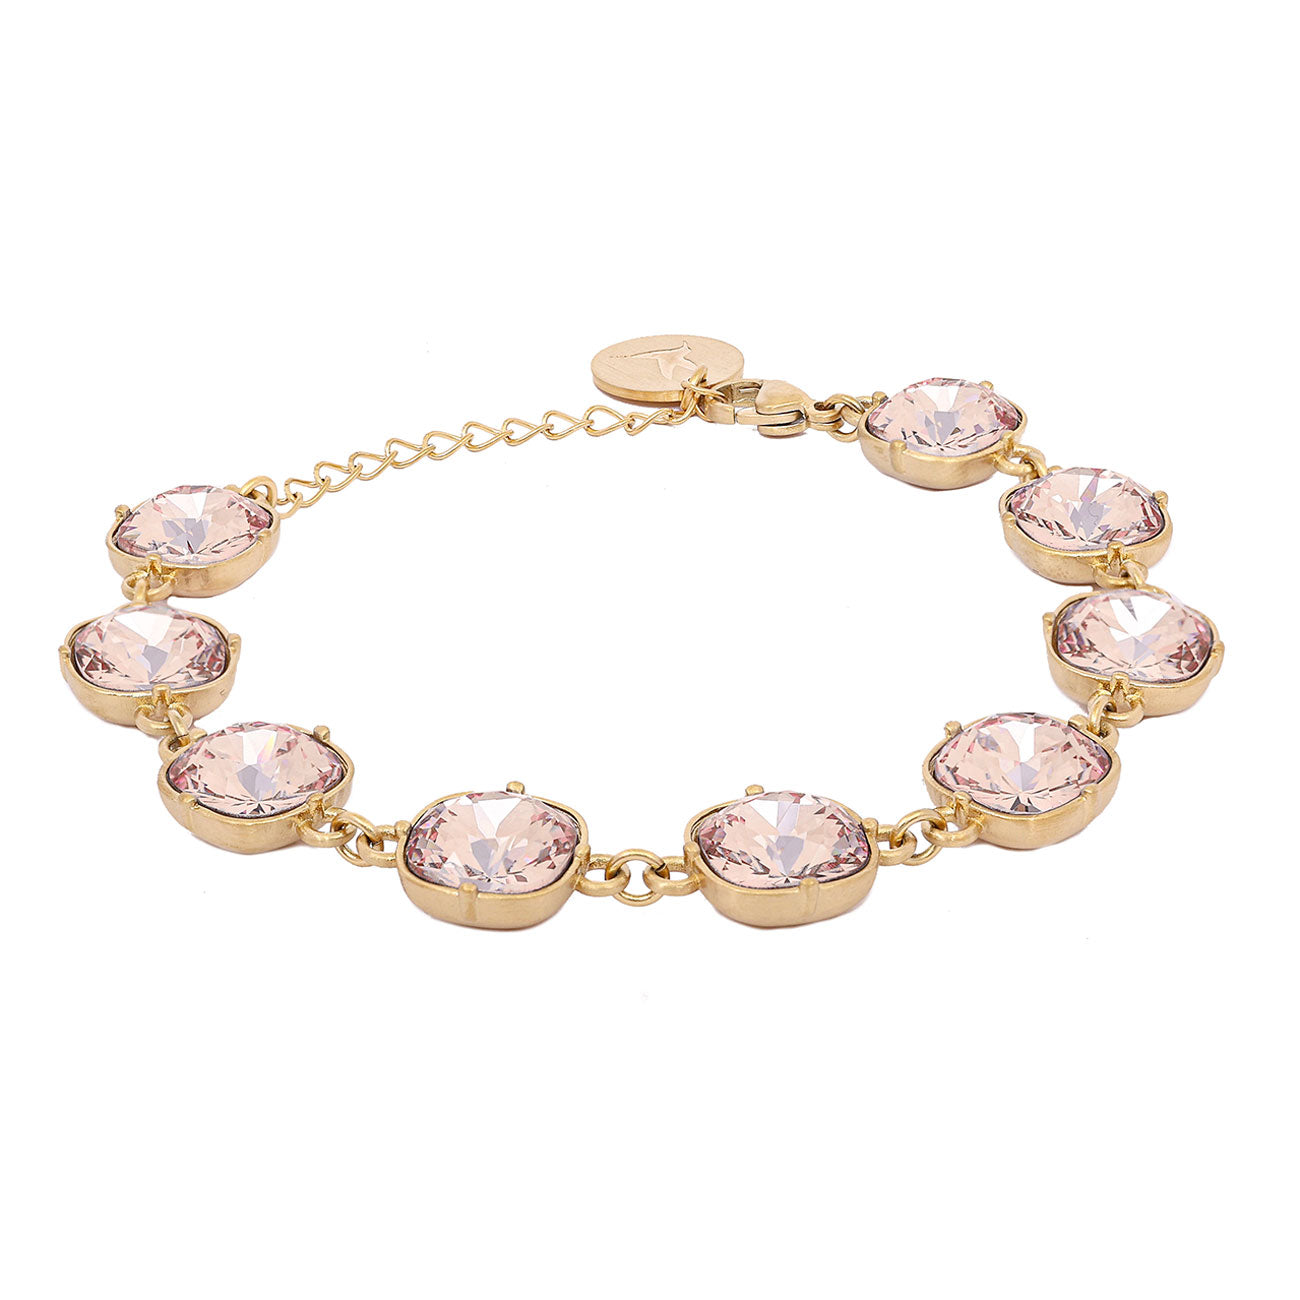 Carla Swarovski lux bracelet - Light peach